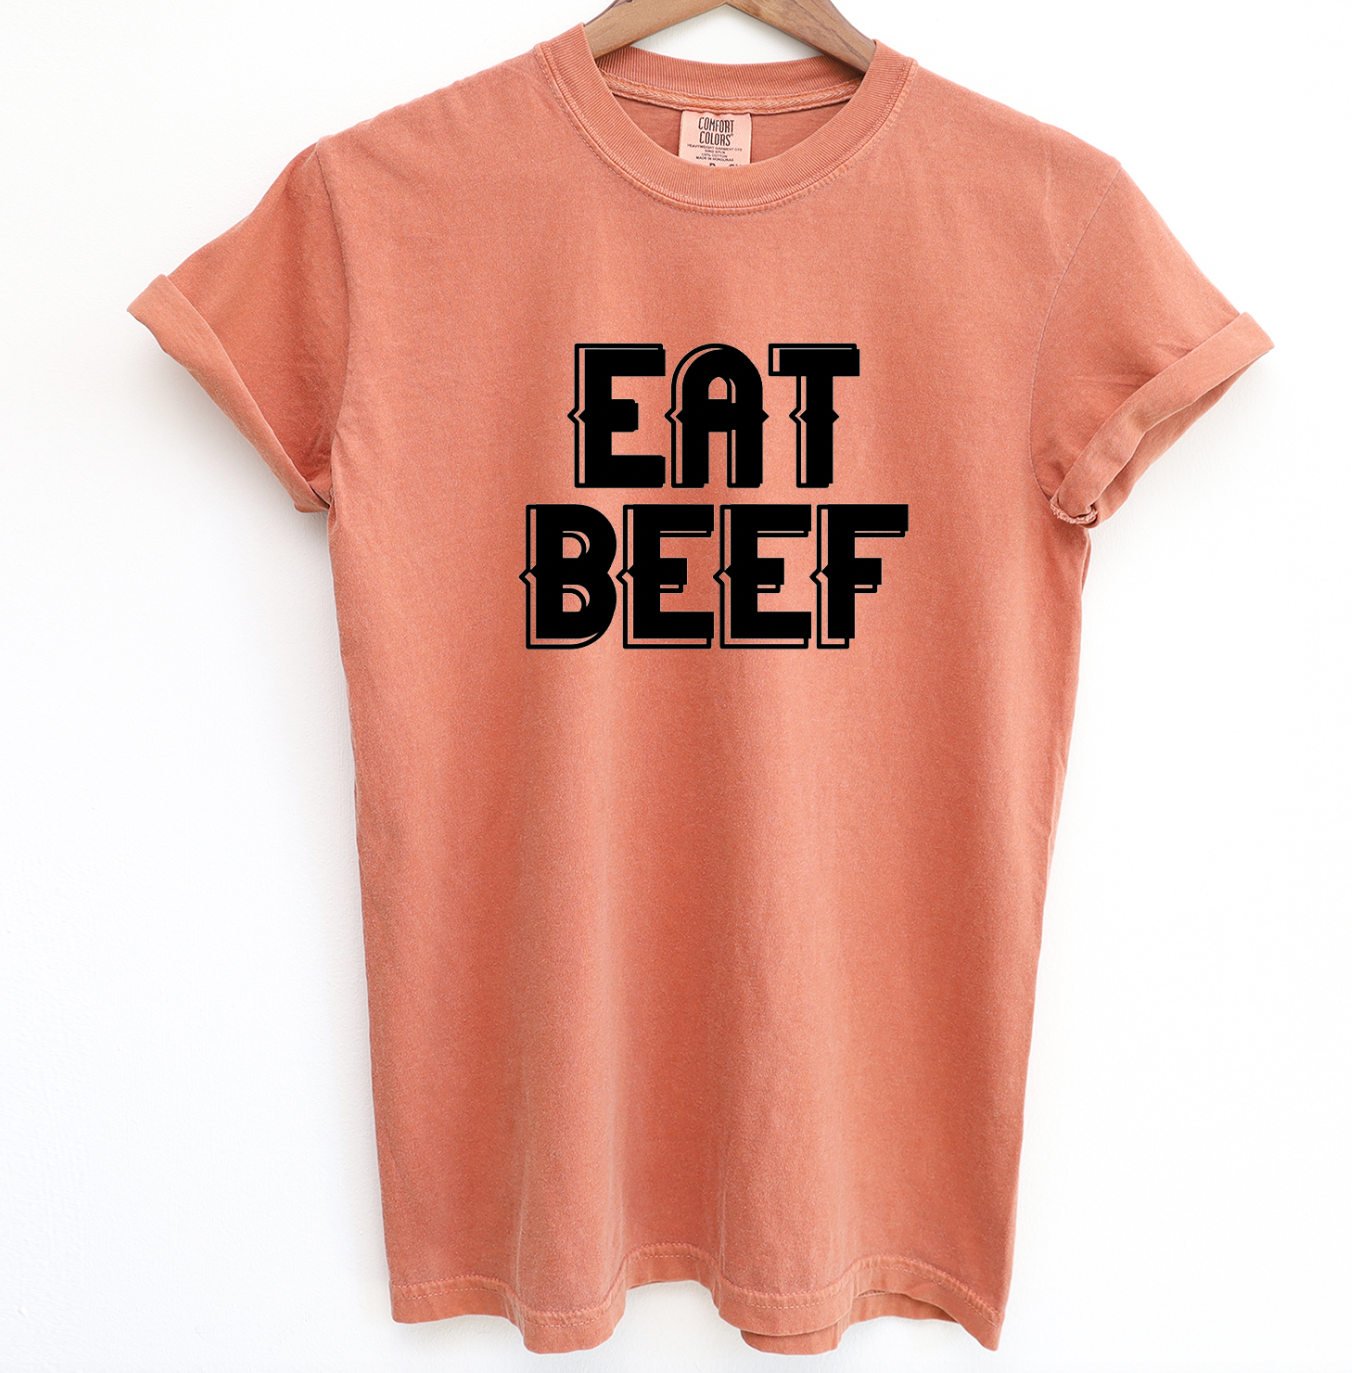 Eat Beef ComfortWash/ComfortColor T-Shirt (S-4XL) - Multiple Colors!